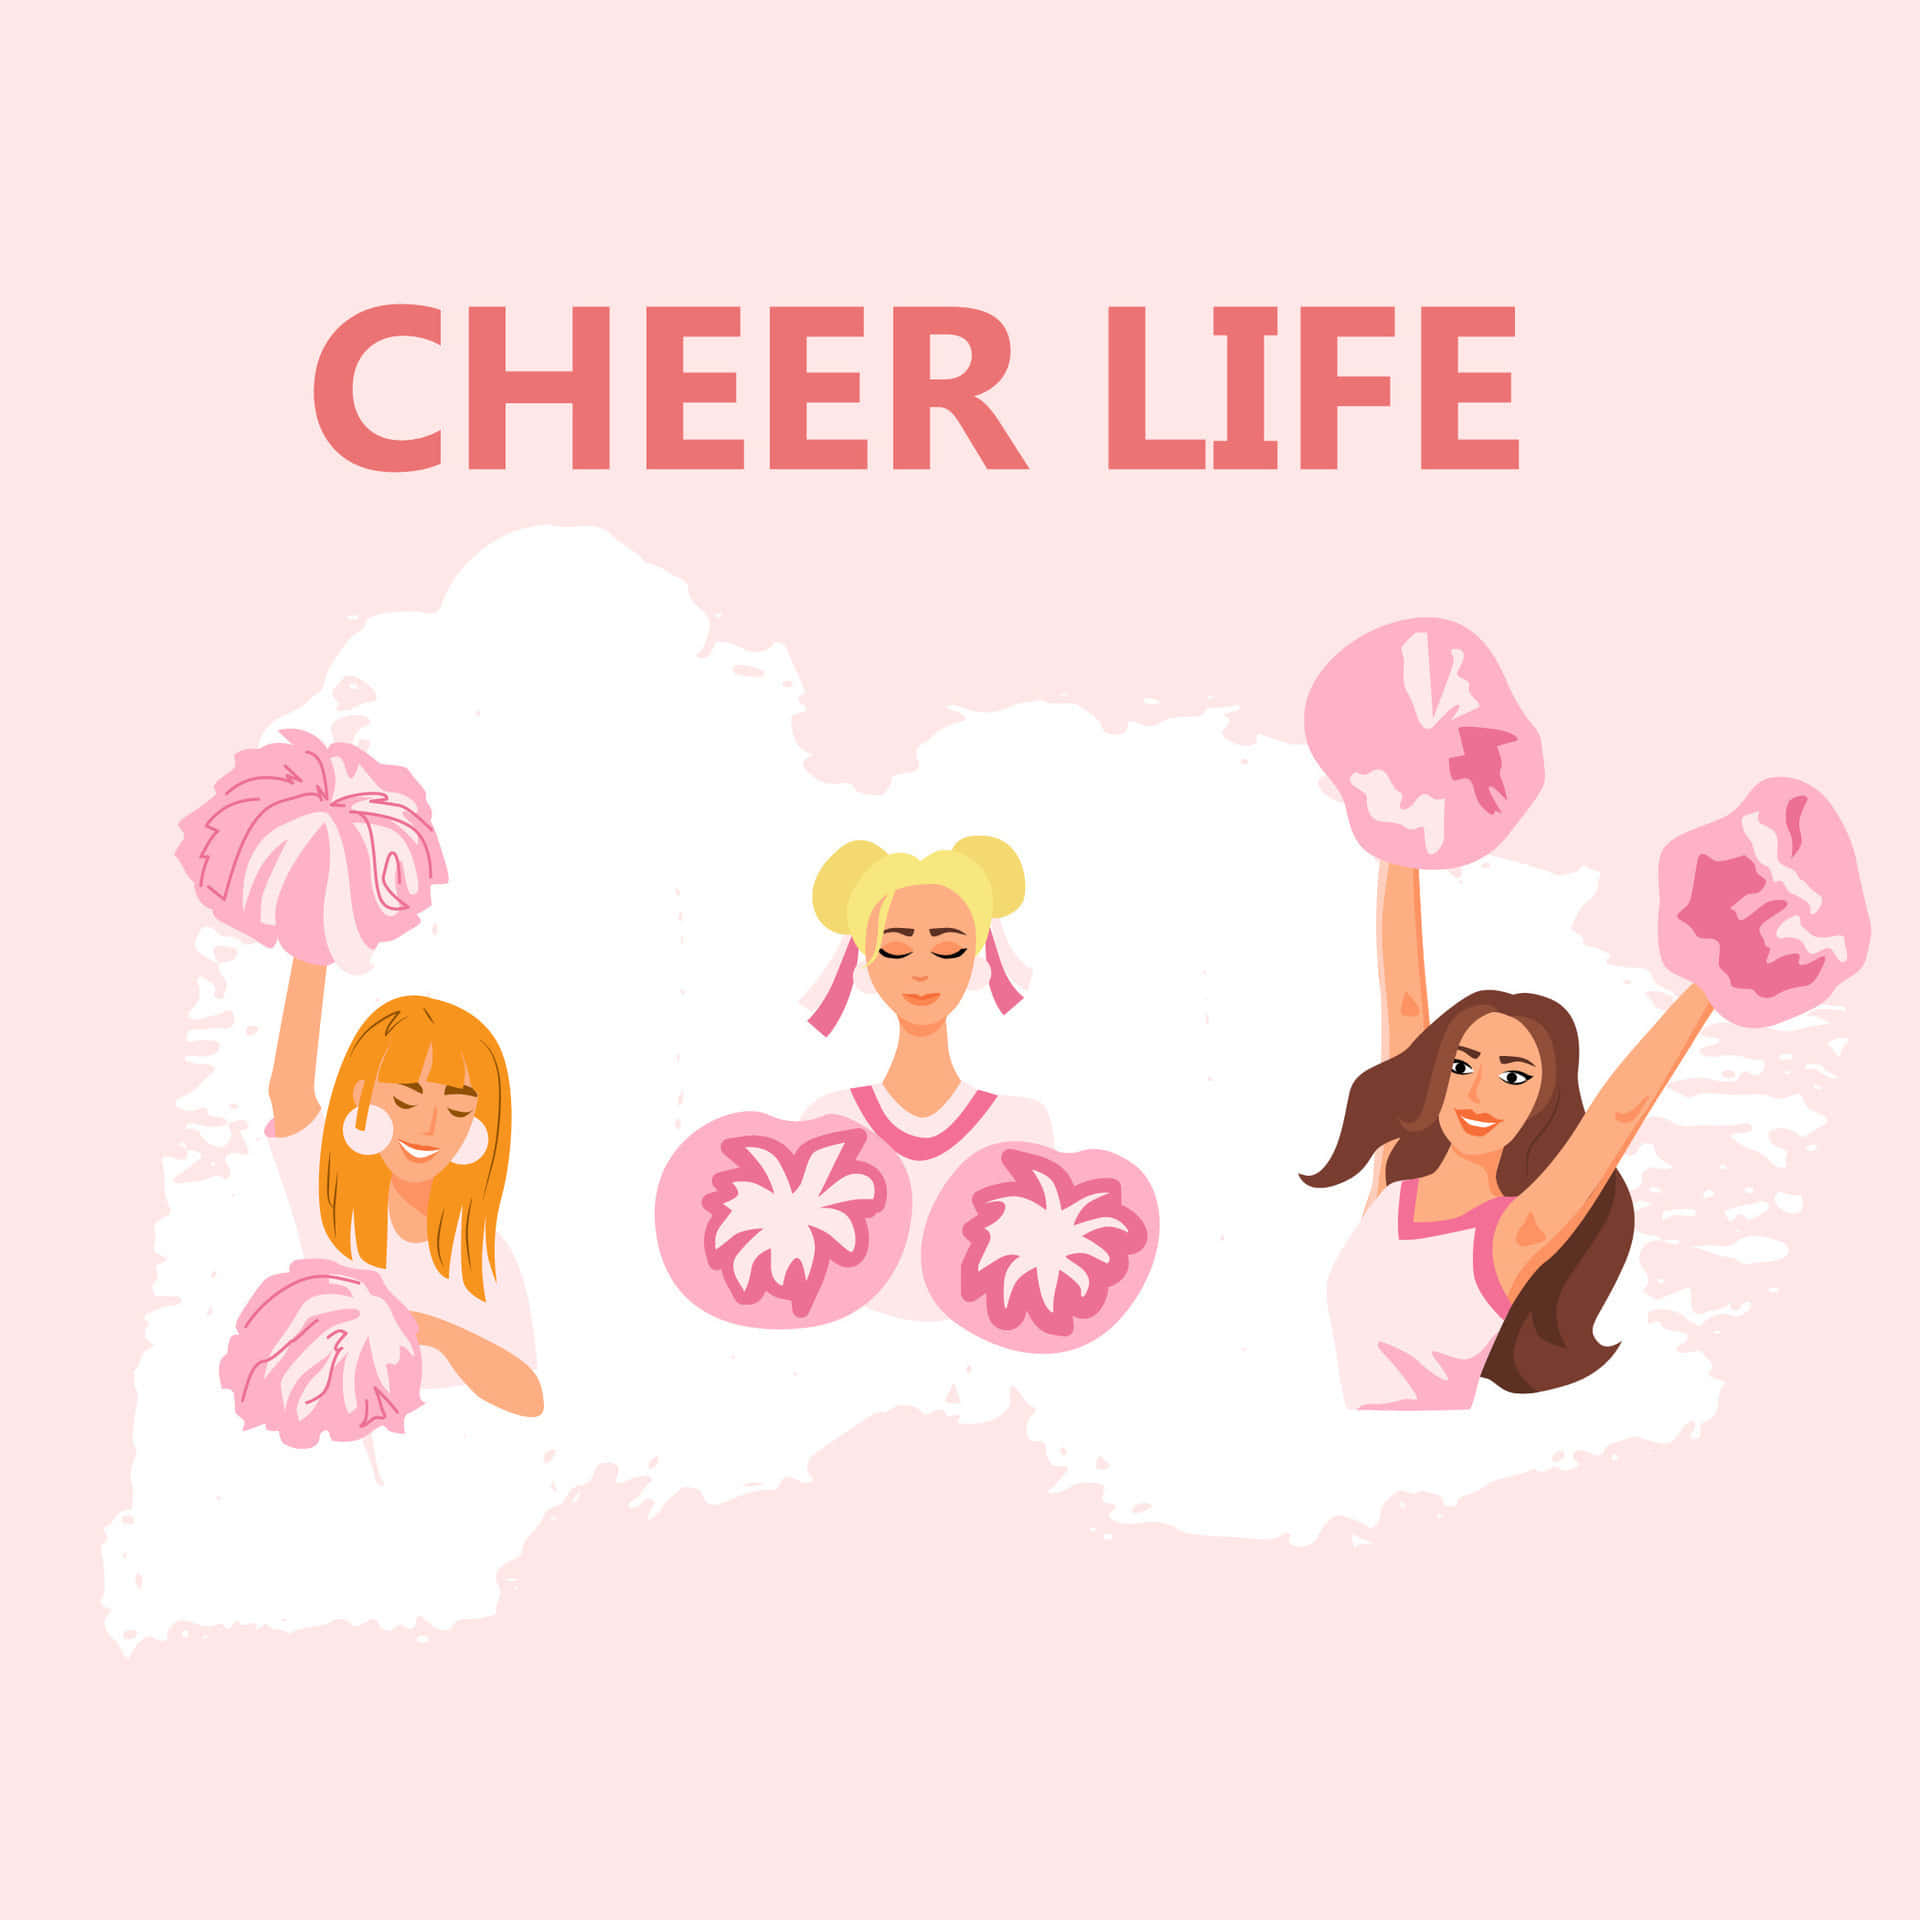 Cheerful Spirit Cheerleading Illustration Wallpaper